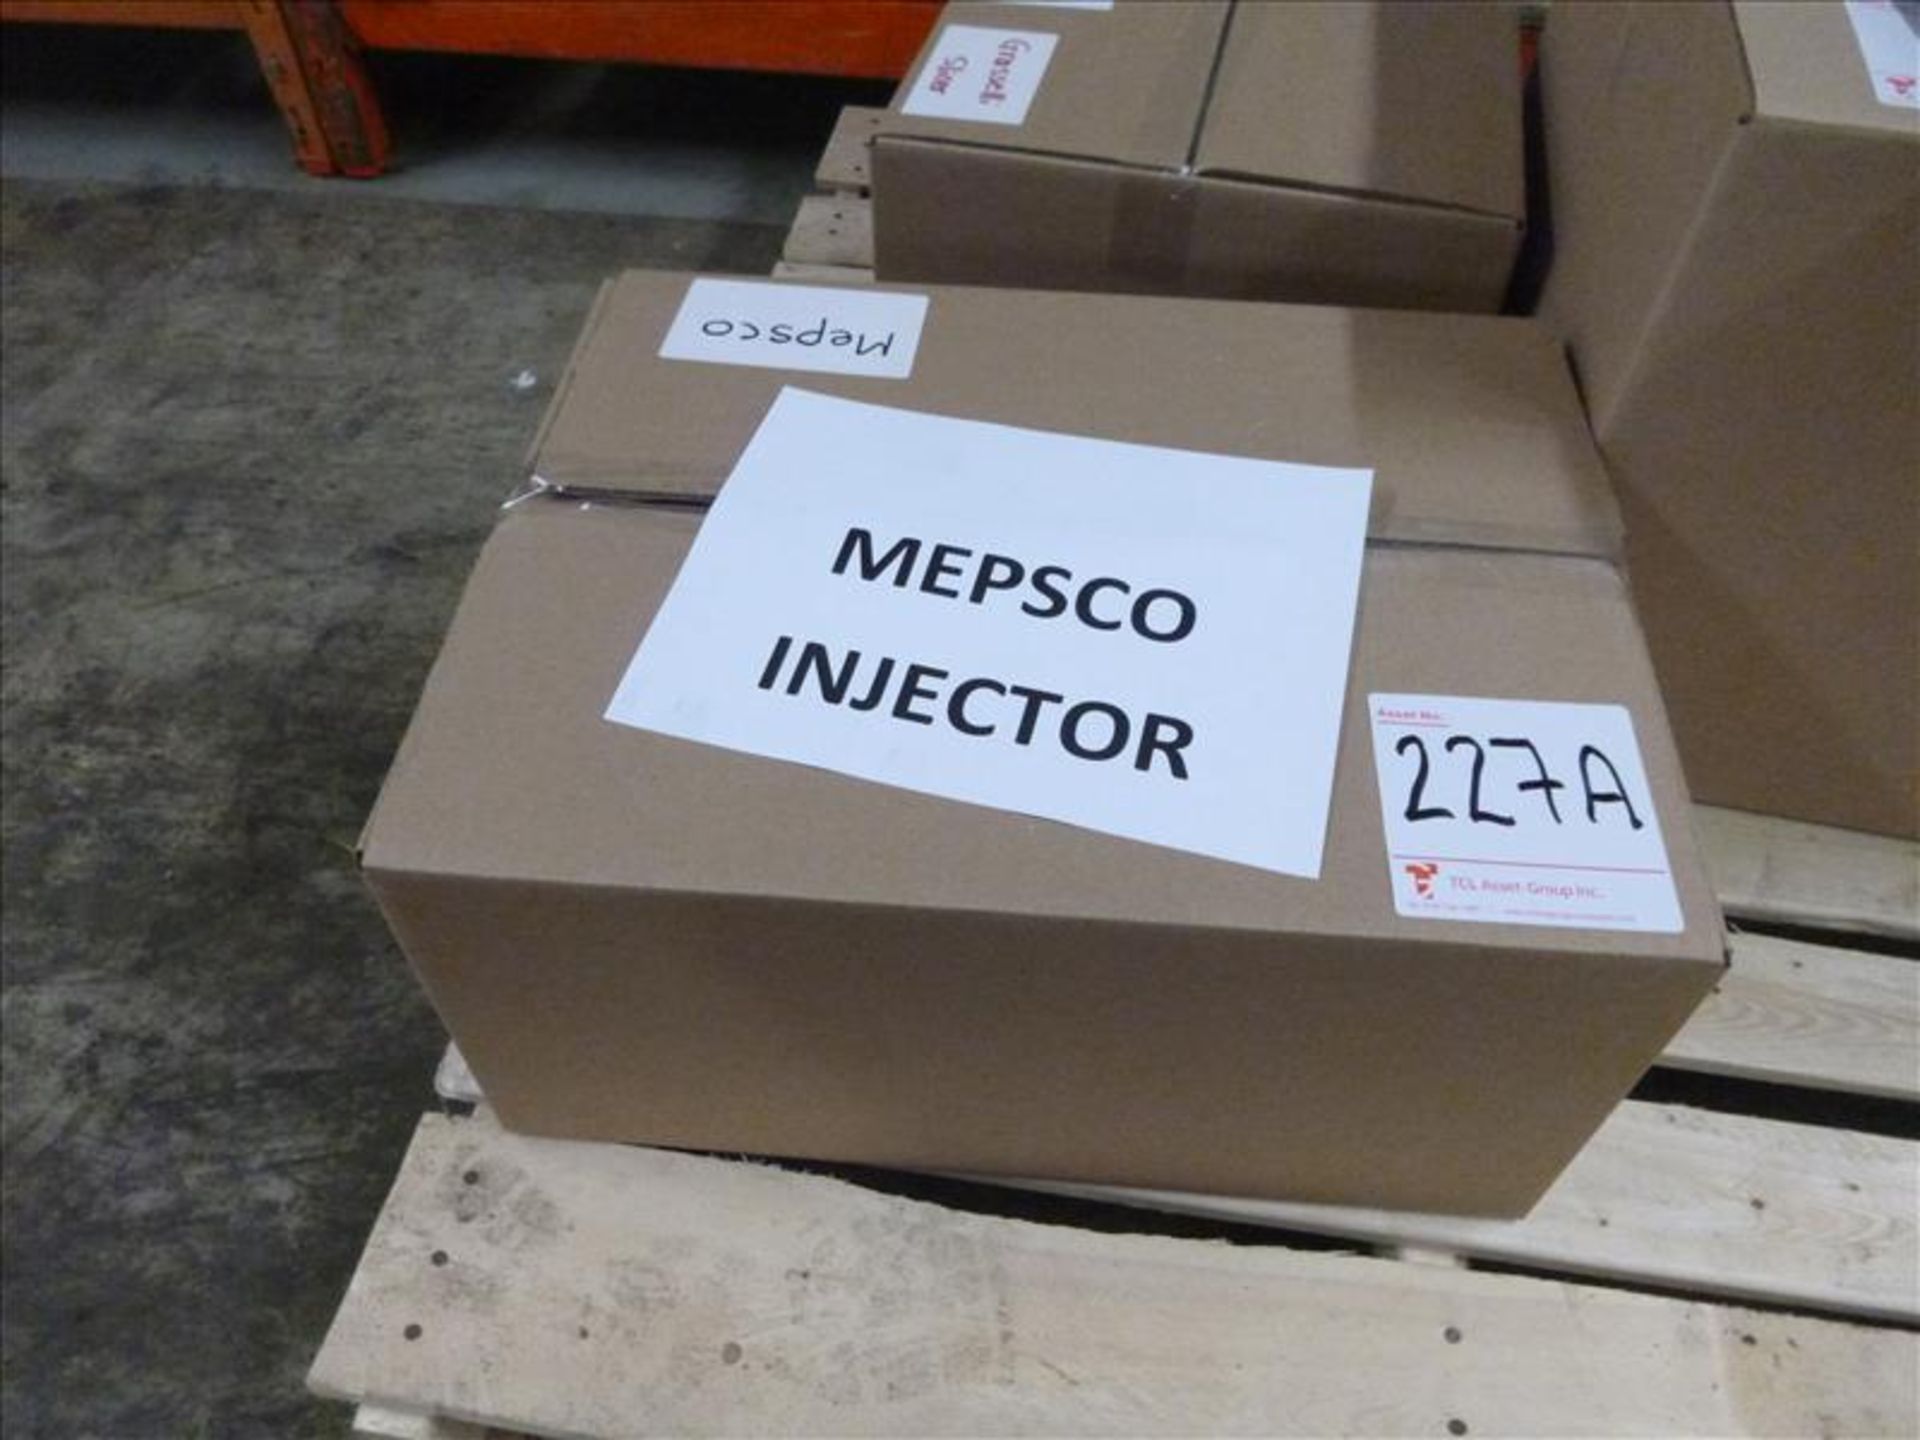 Mepsco brine injector spare parts (1 box)